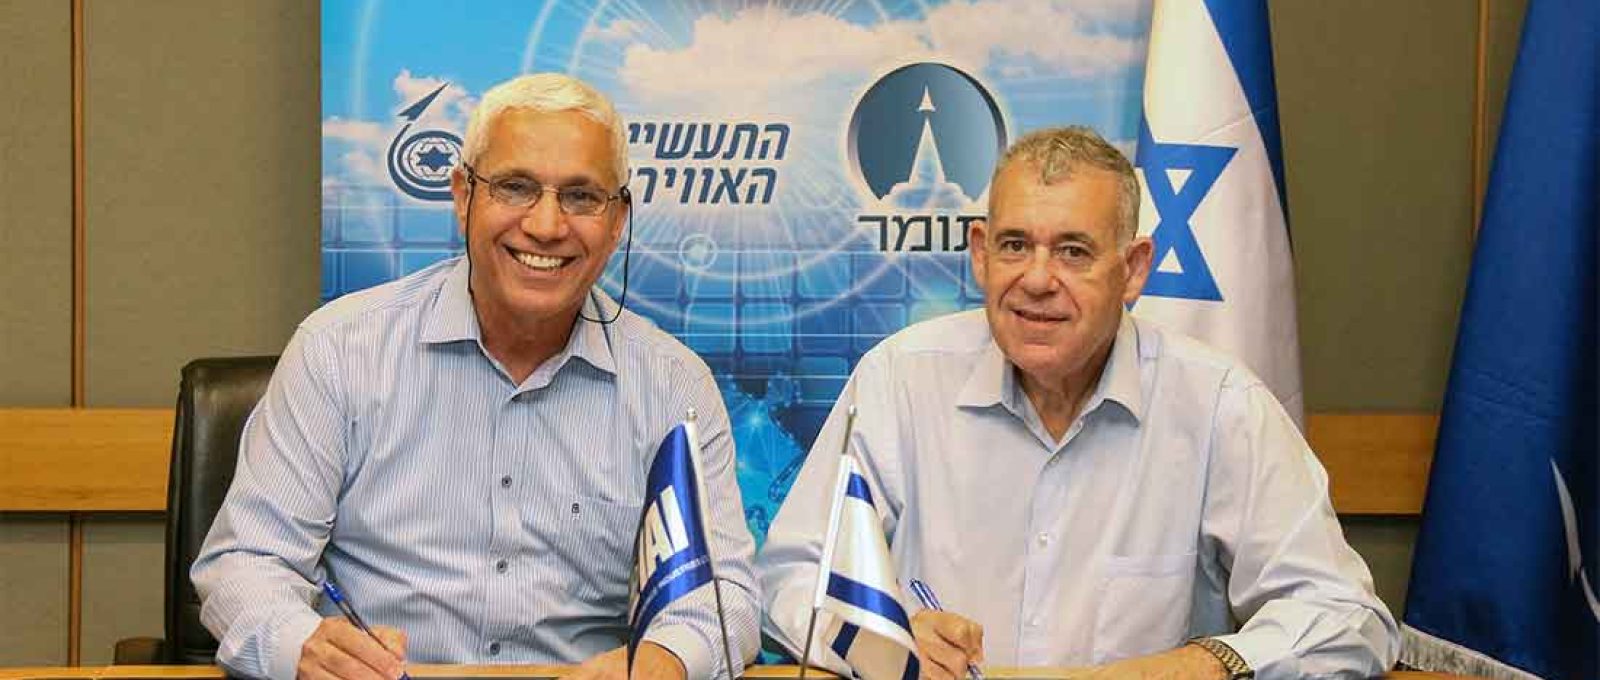 Boaz Levy, Presidente e CEO da IAI, e Mordi Ben Ami, CEO da Tomer, na assinatura do MoU (Foto: Michael Vinersky/IAI).